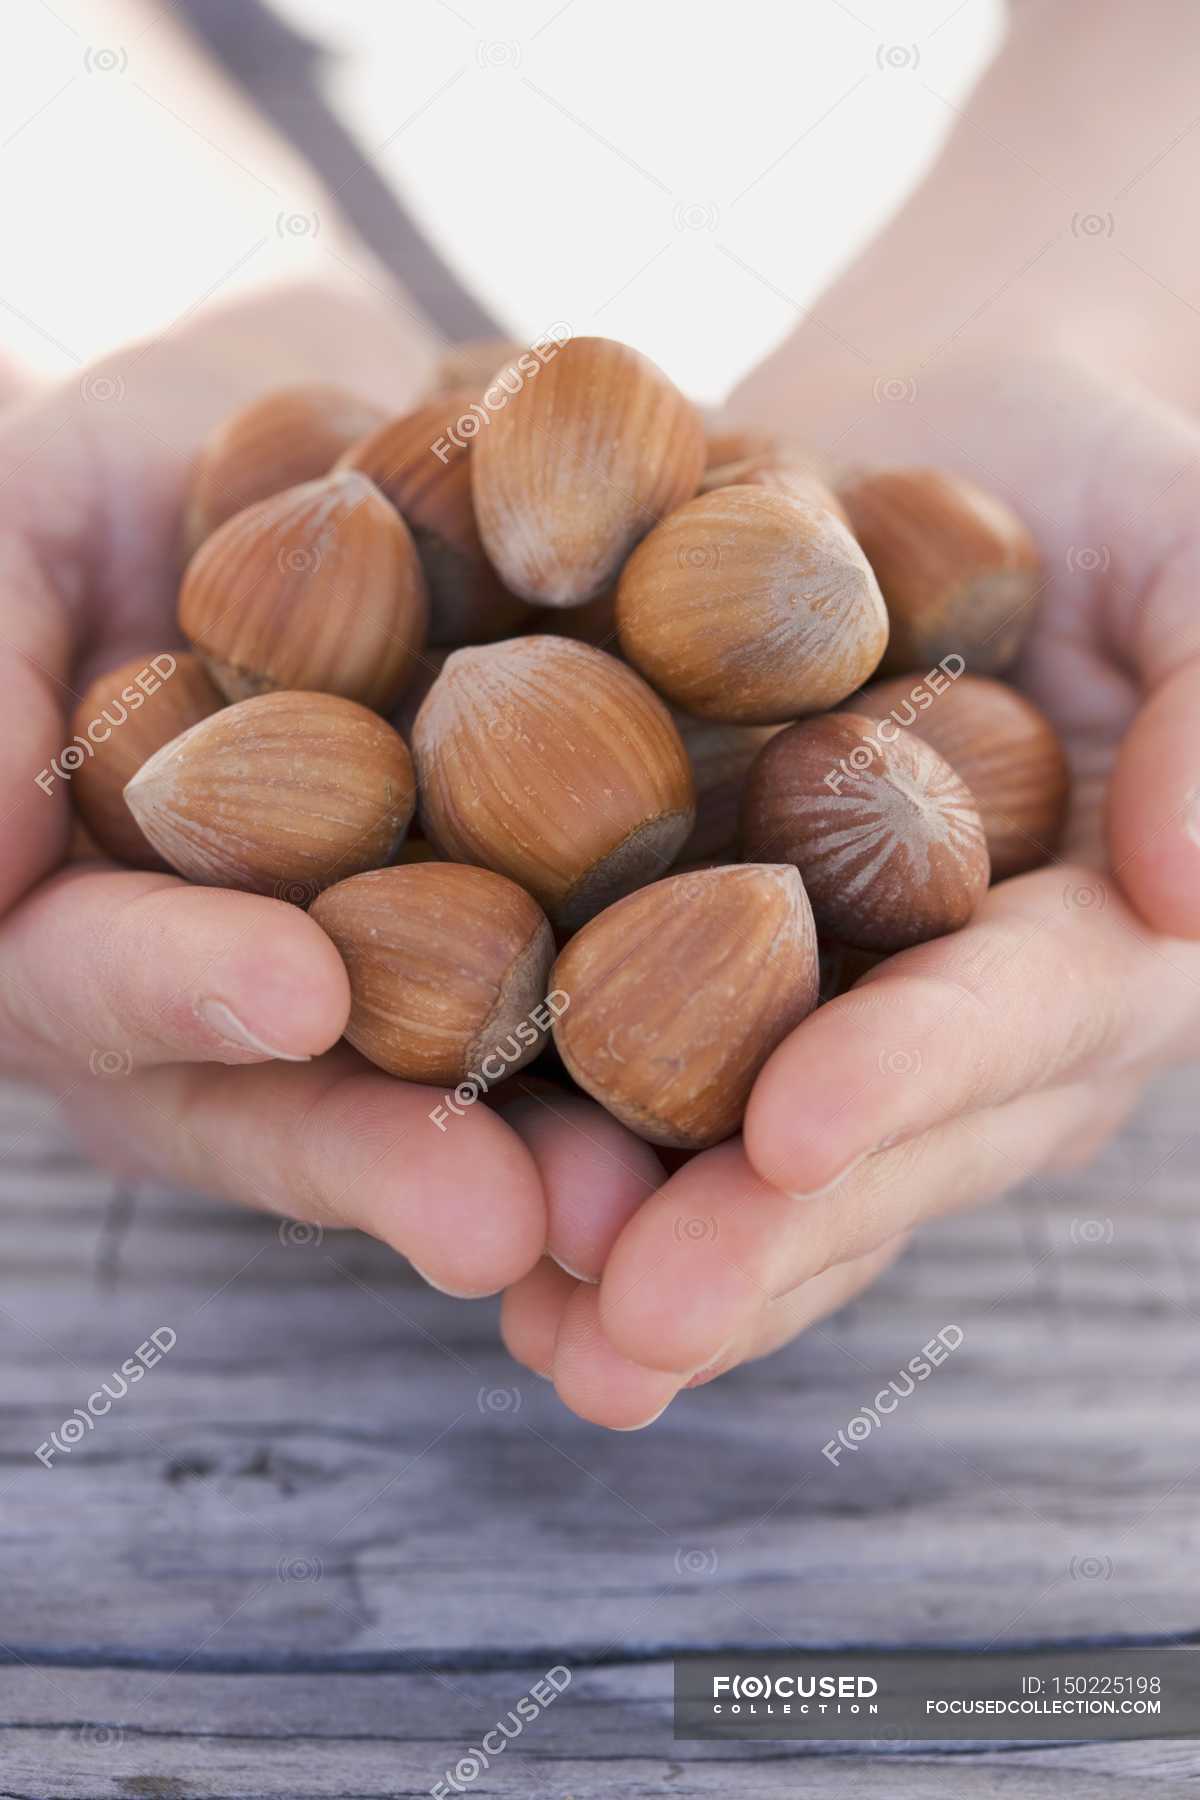 Hands holding hazelnuts — Stock Photo | #150225198